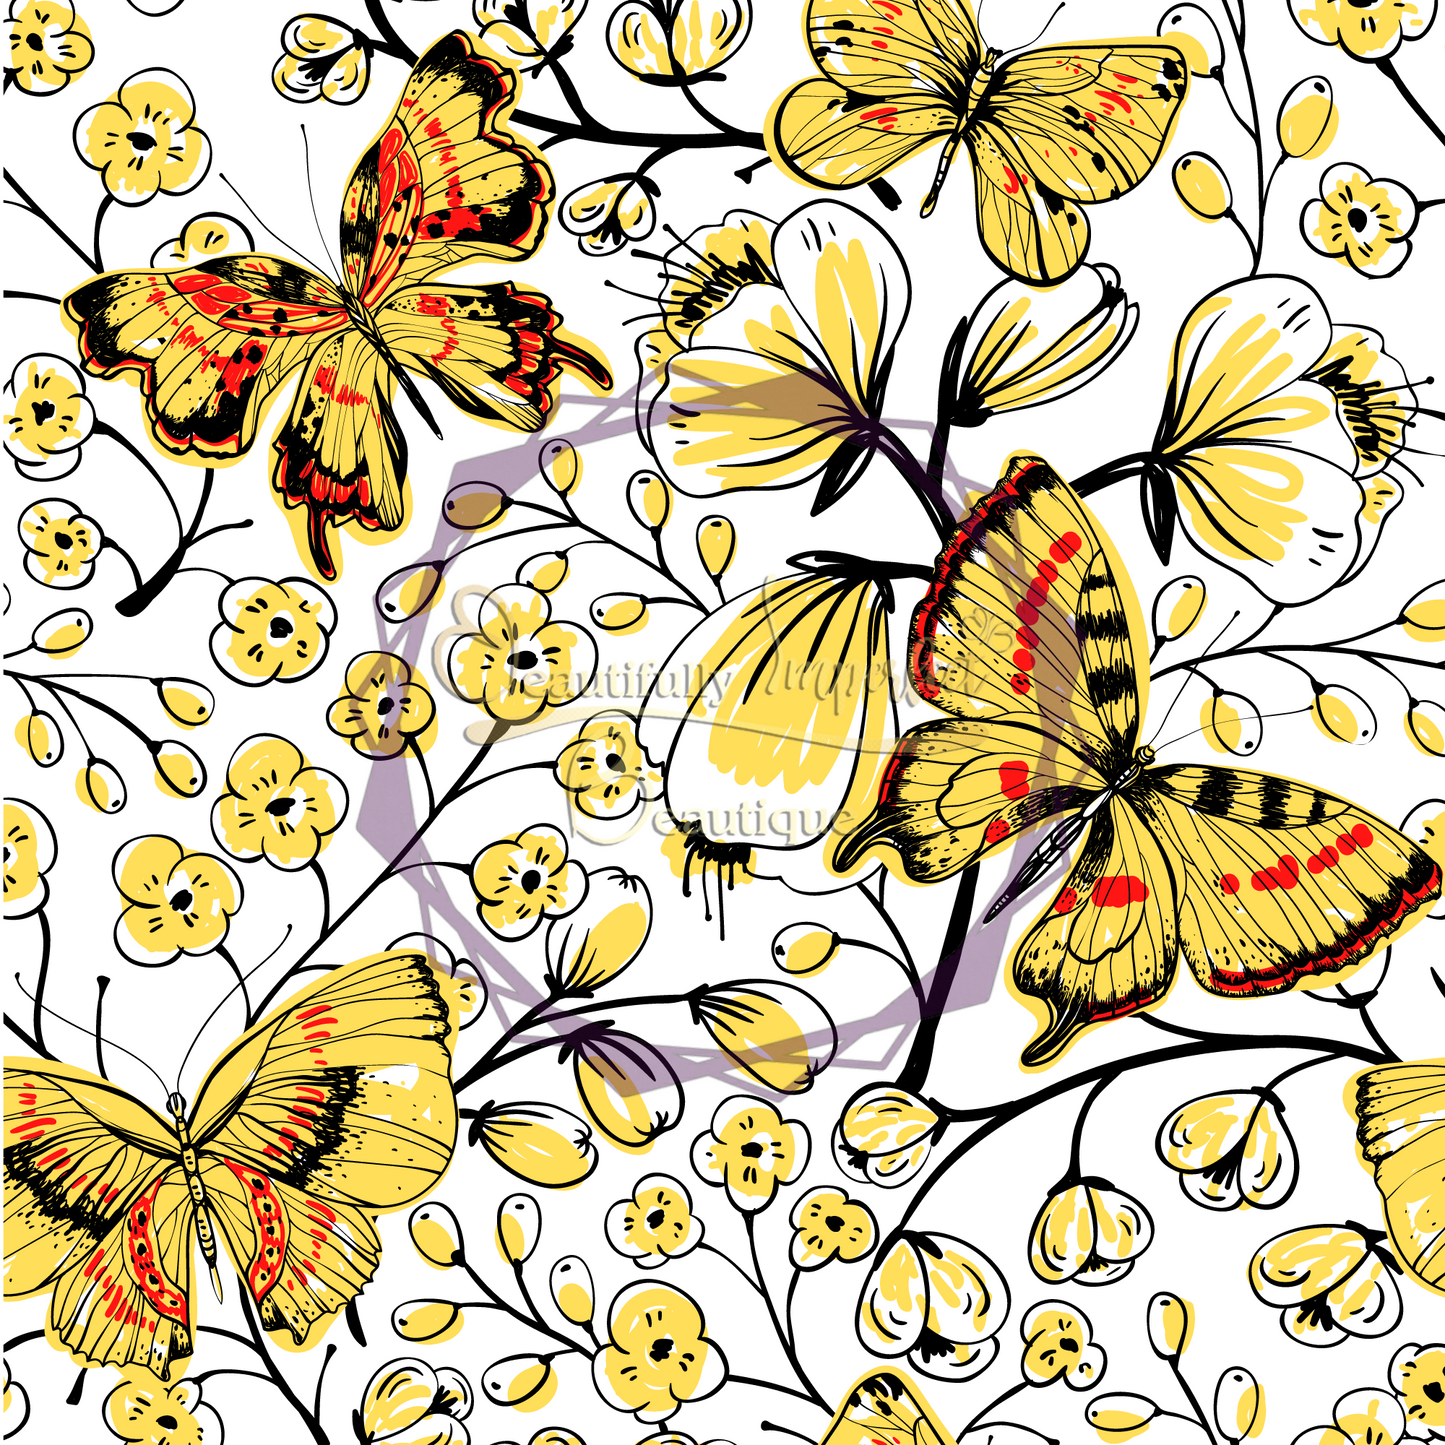 Springtime Flowers and Butterflies Digital Paper